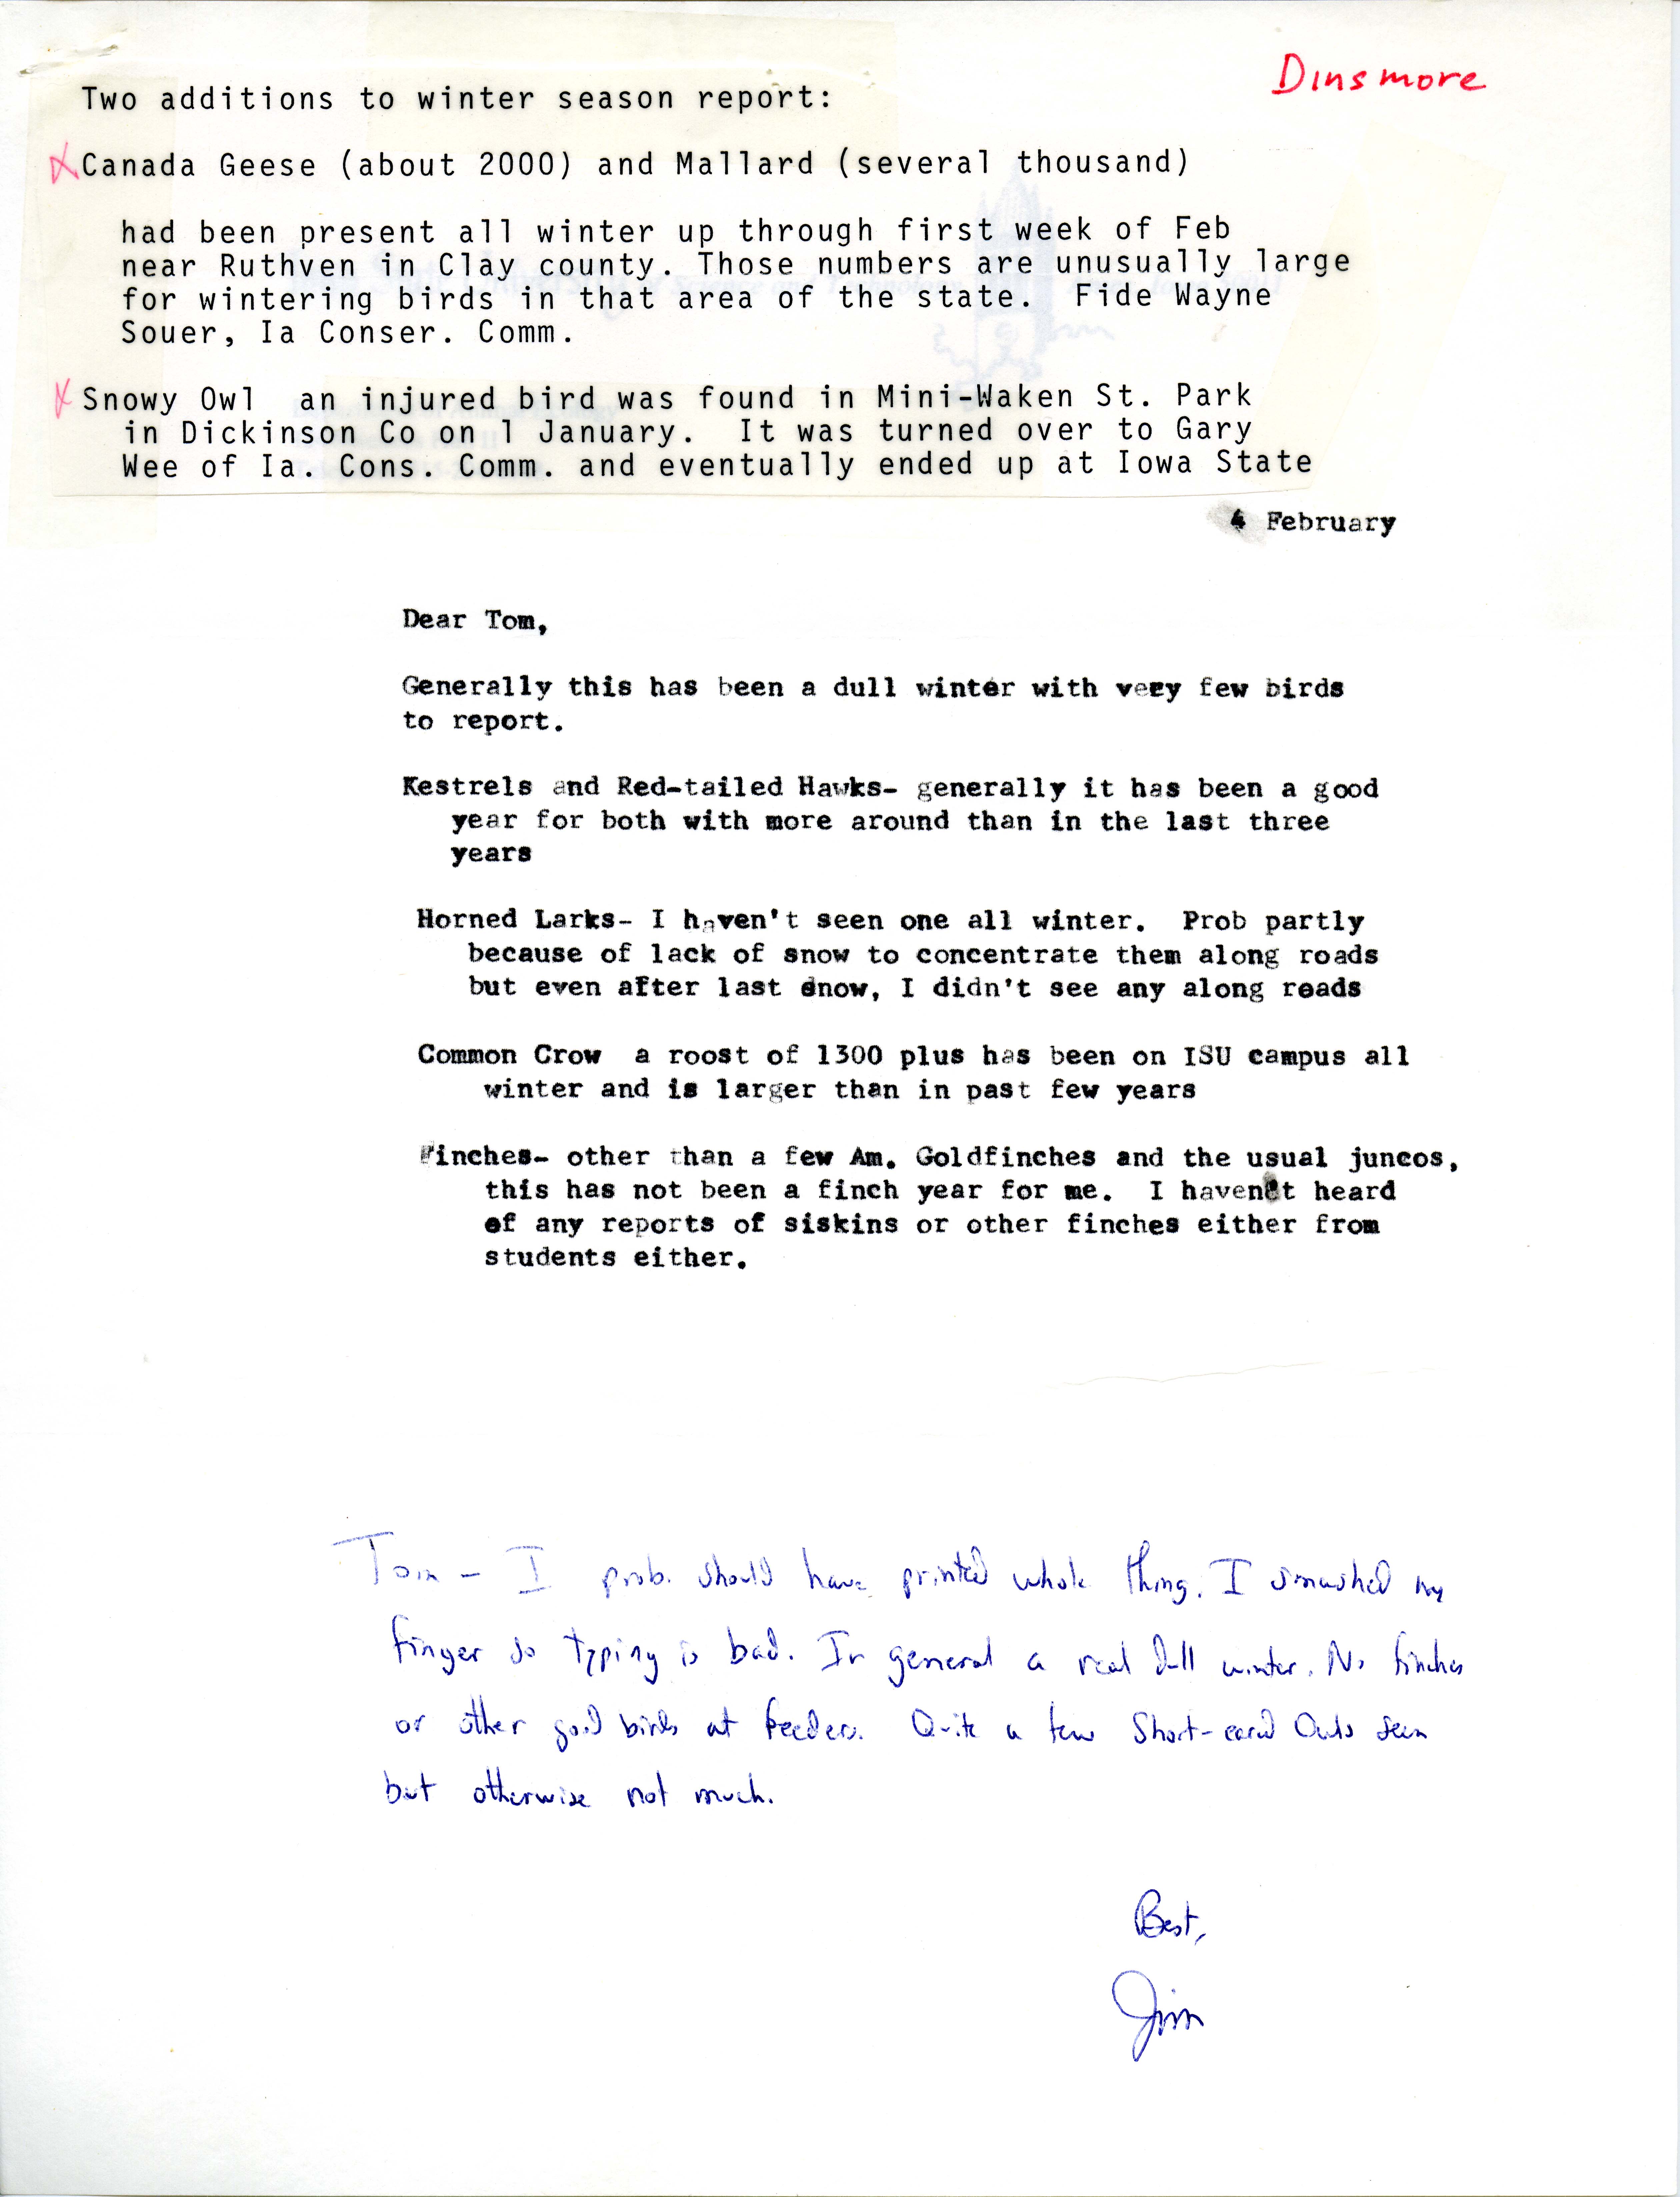 James J. Dinsmore letter to Thomas H. Kent regarding bird sightings, February 4, 1980